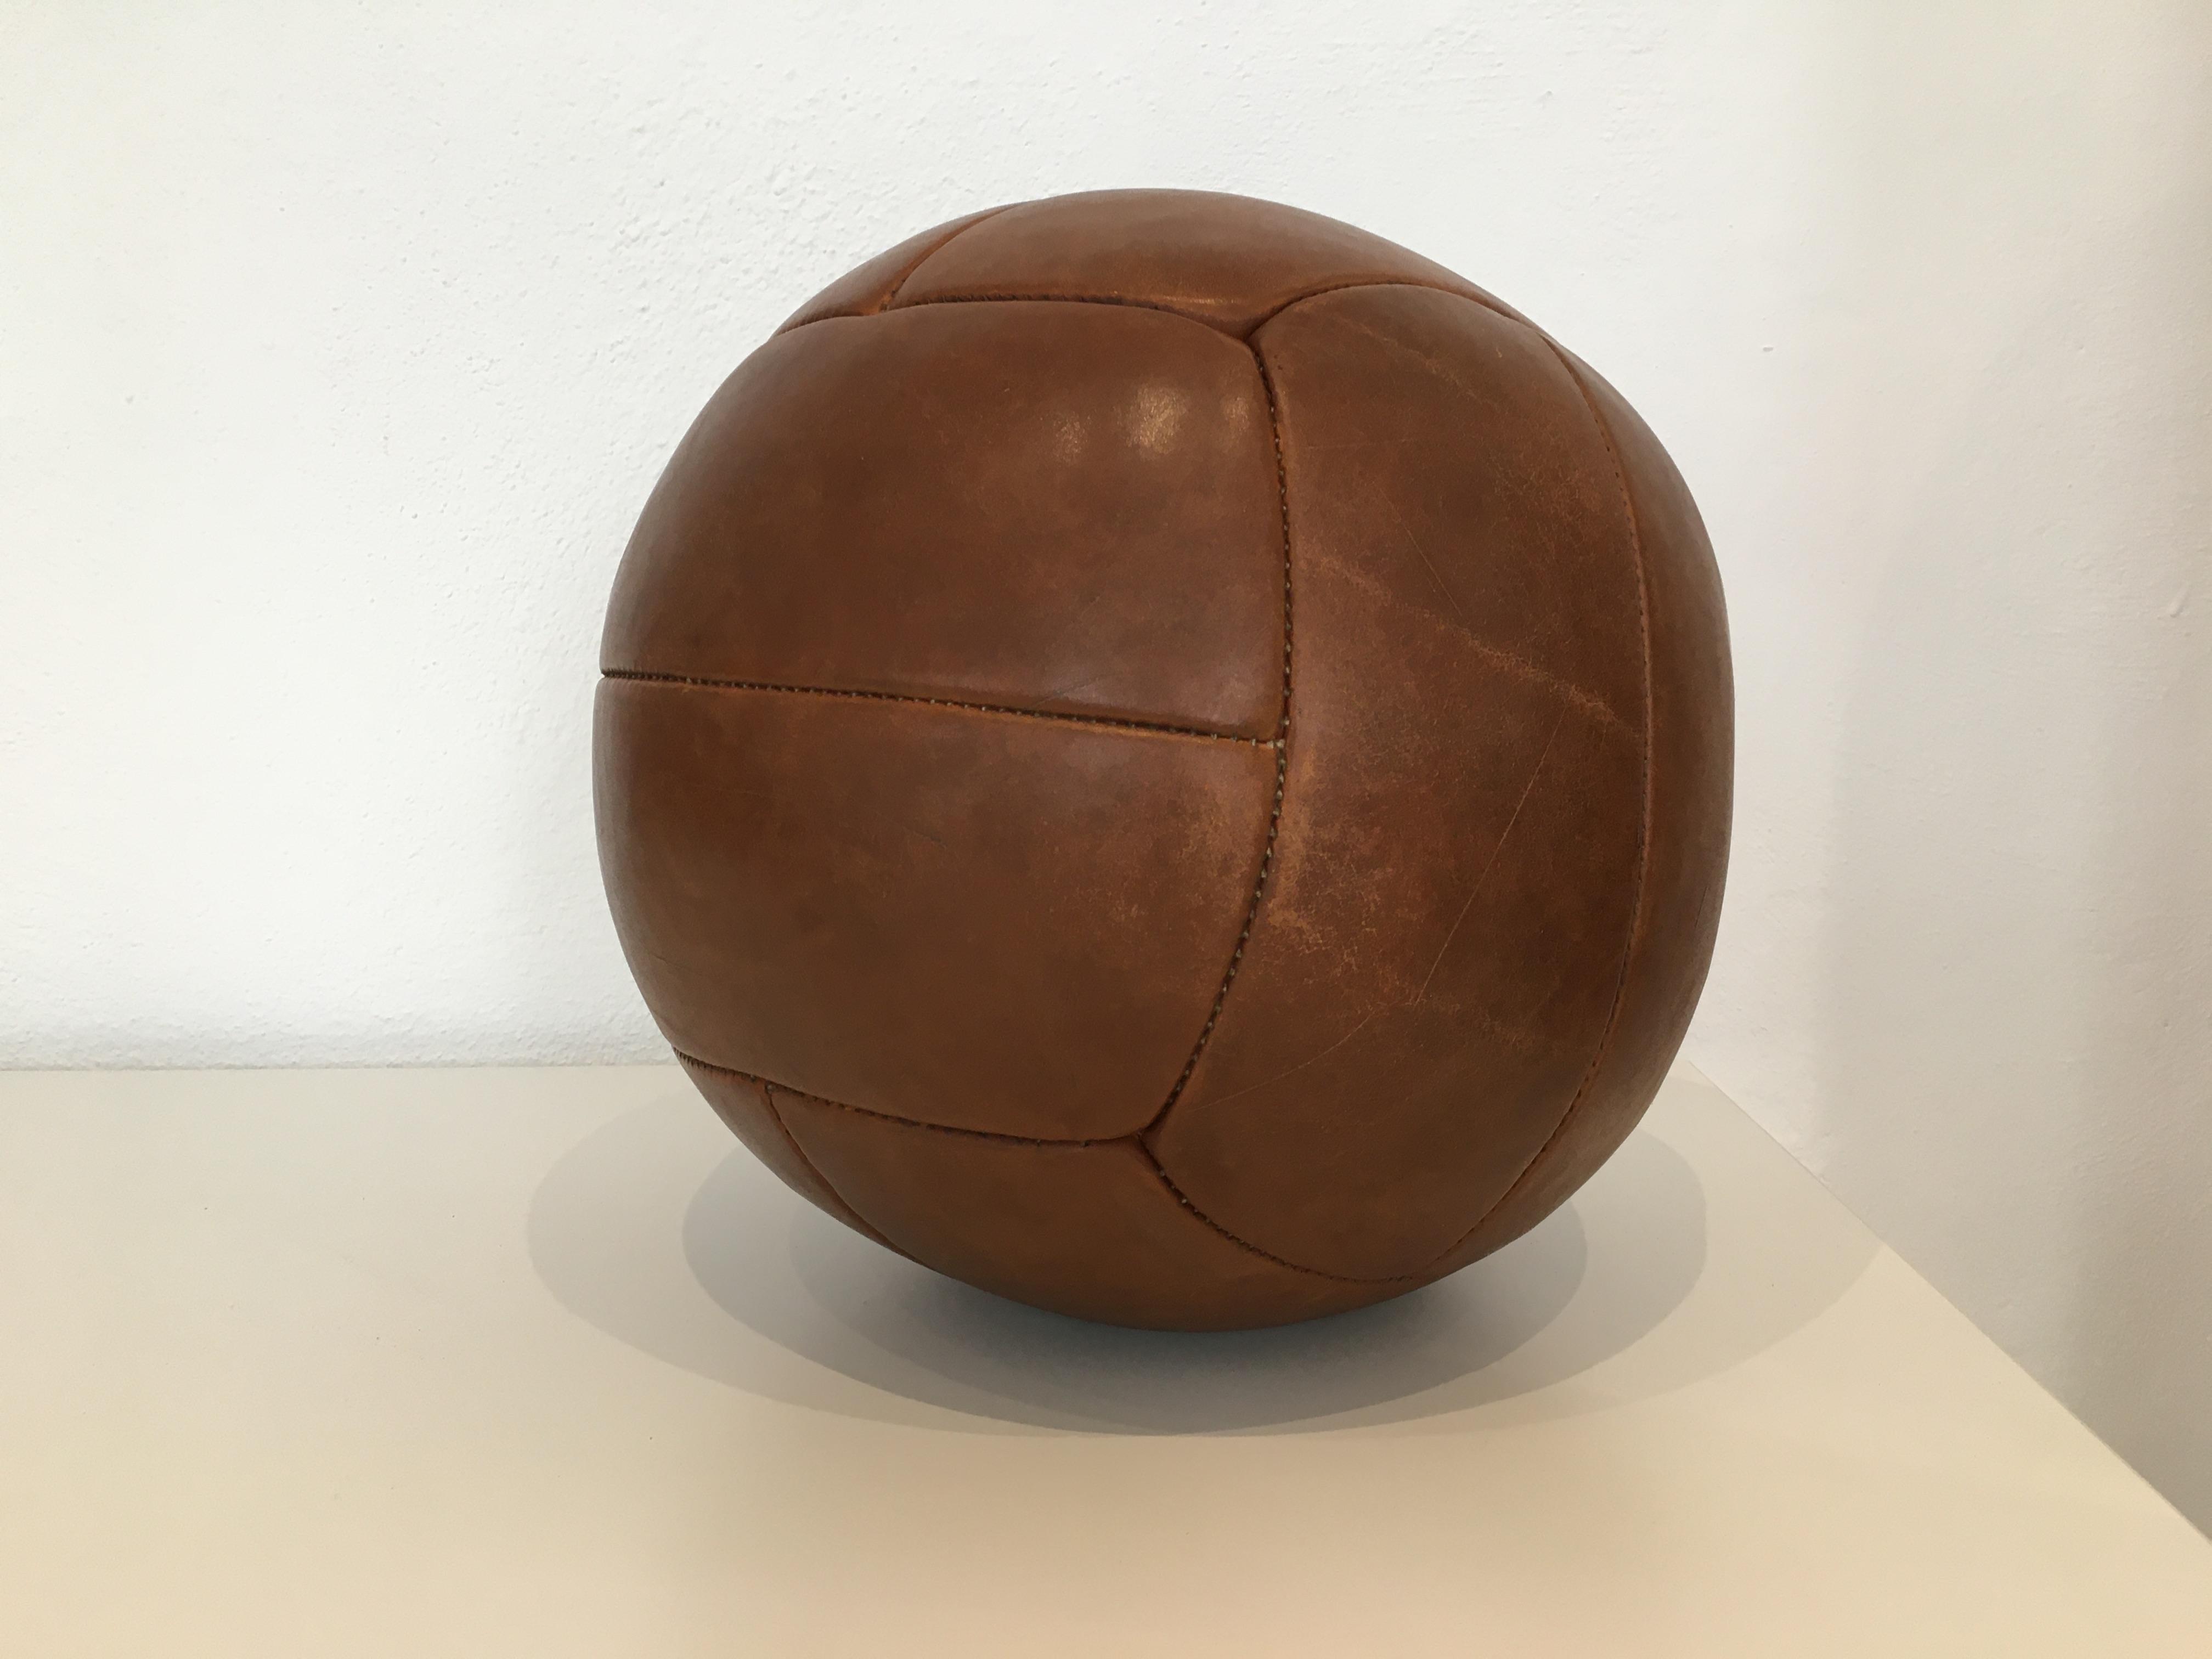 20th Century Vintage Brown Leather Medicine Ball, 5kg, 1930s